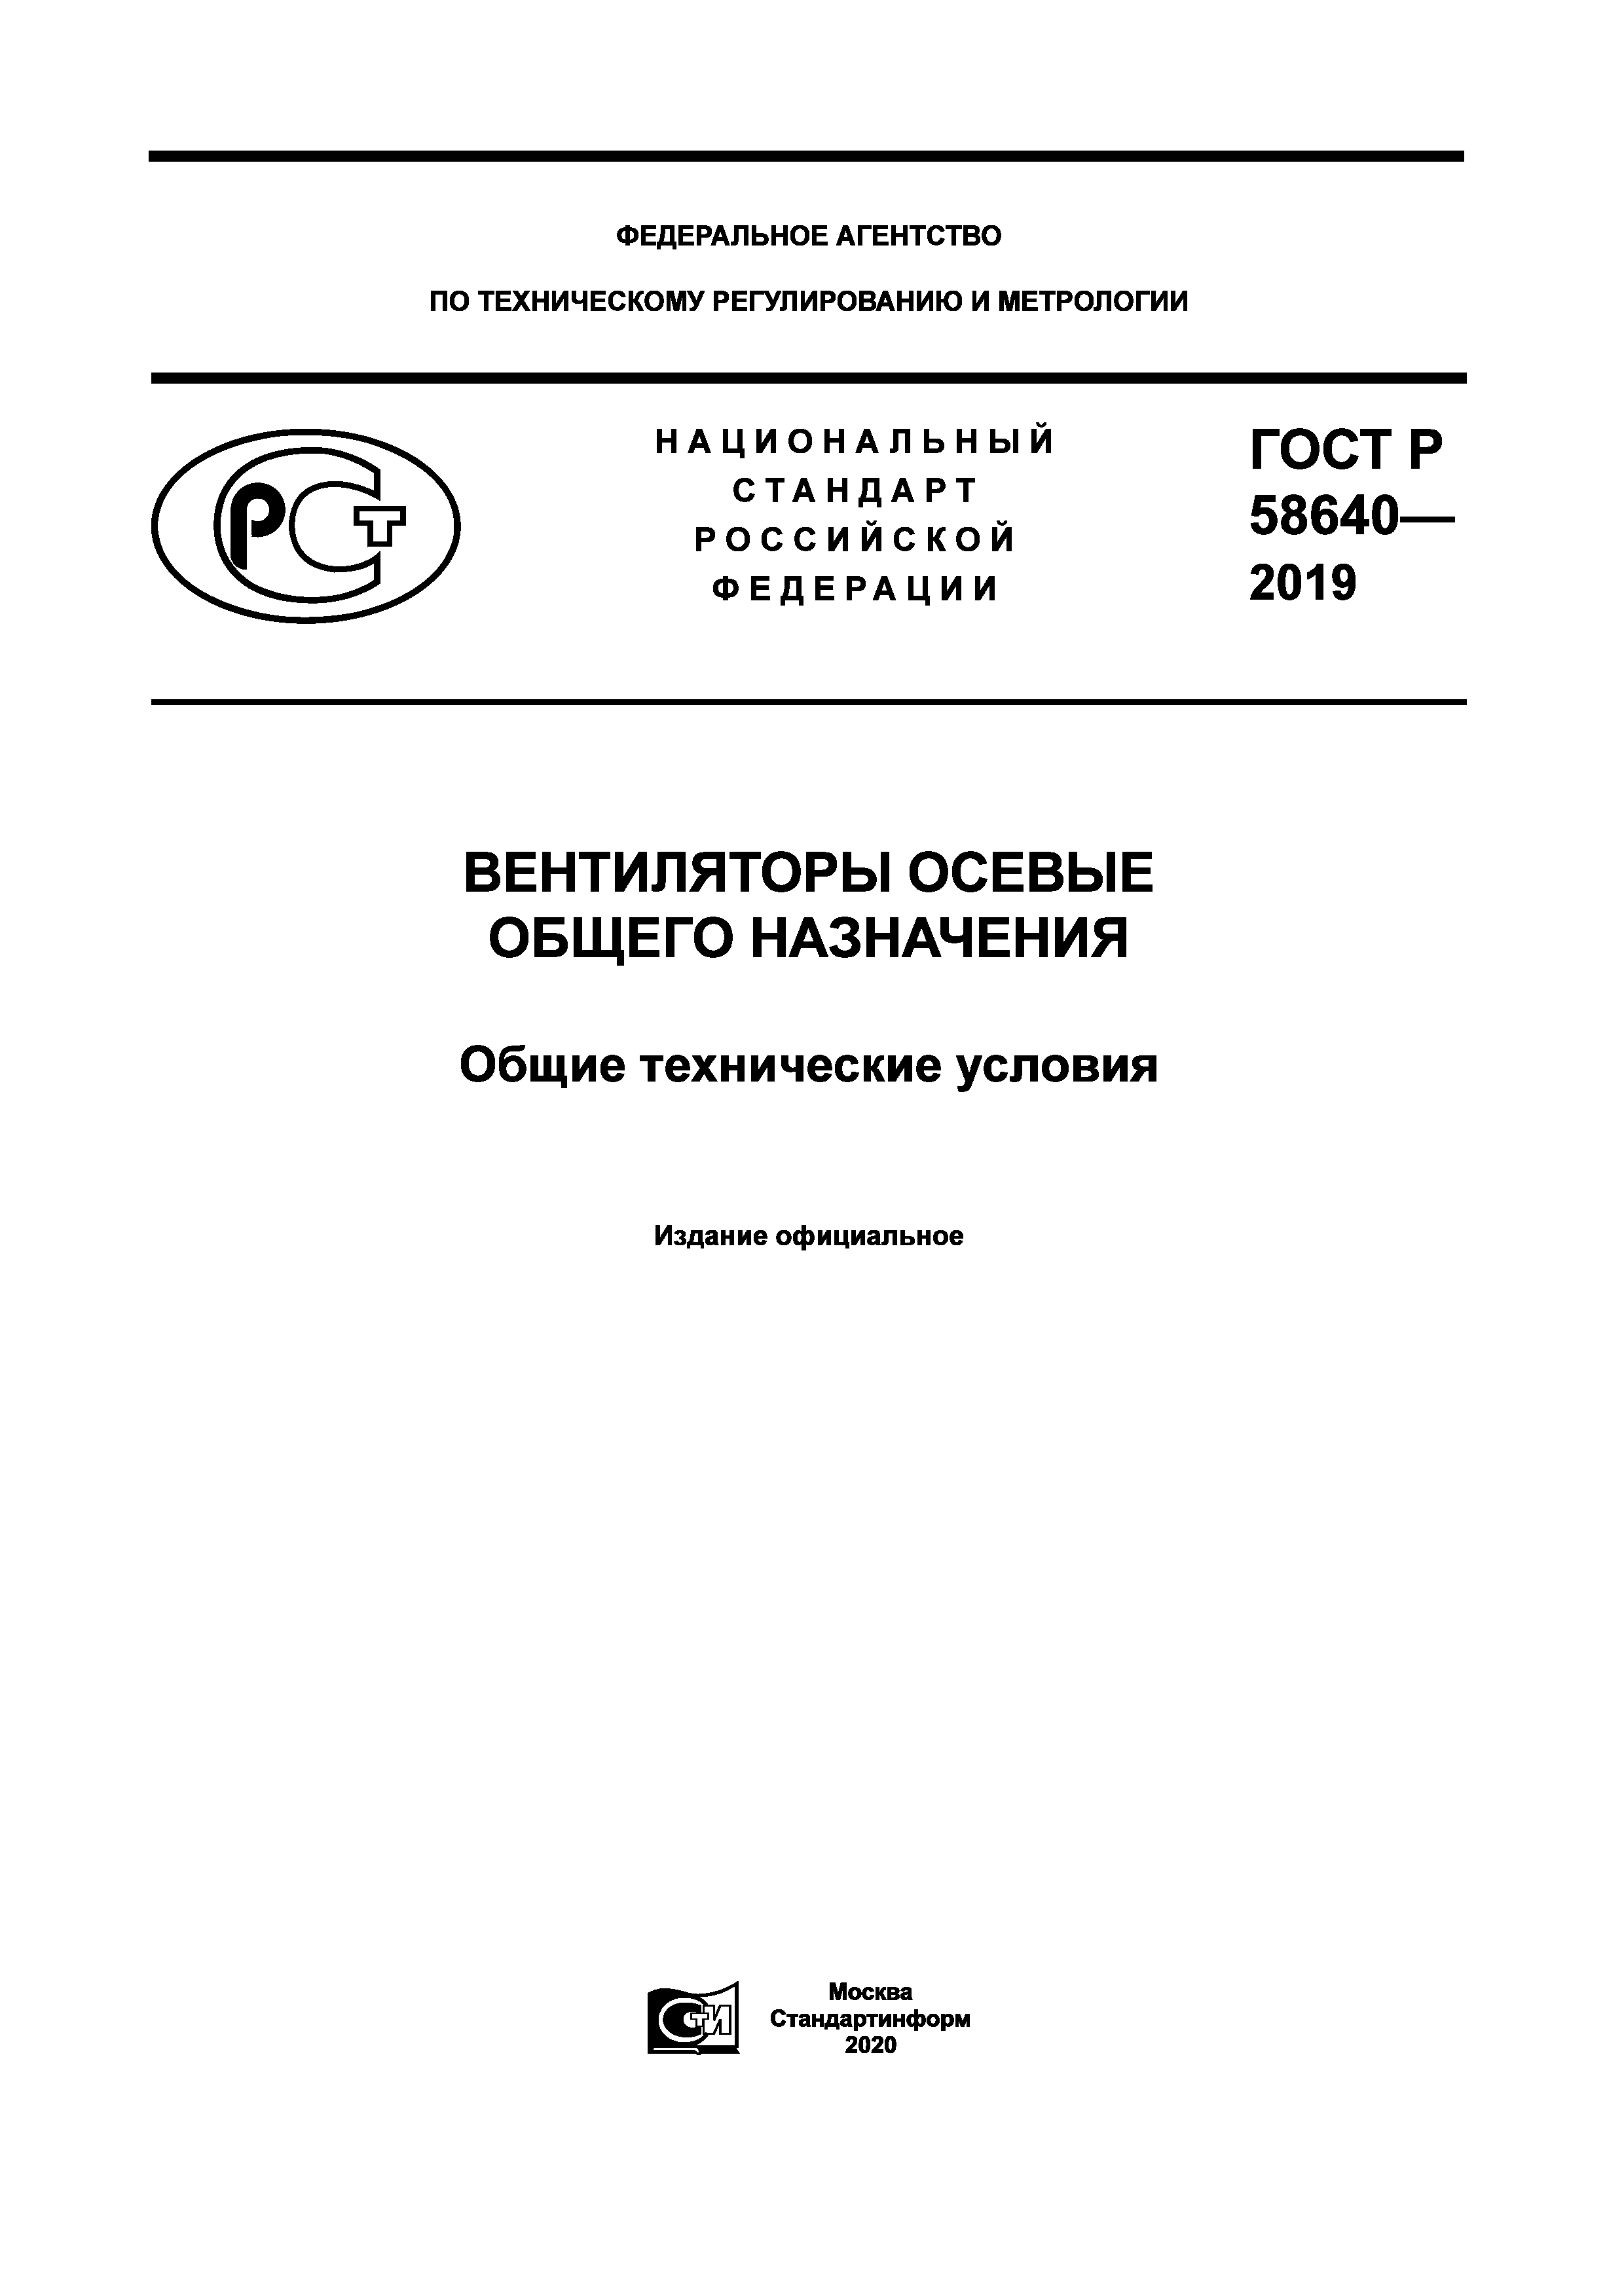 ГОСТ Р 58640-2019